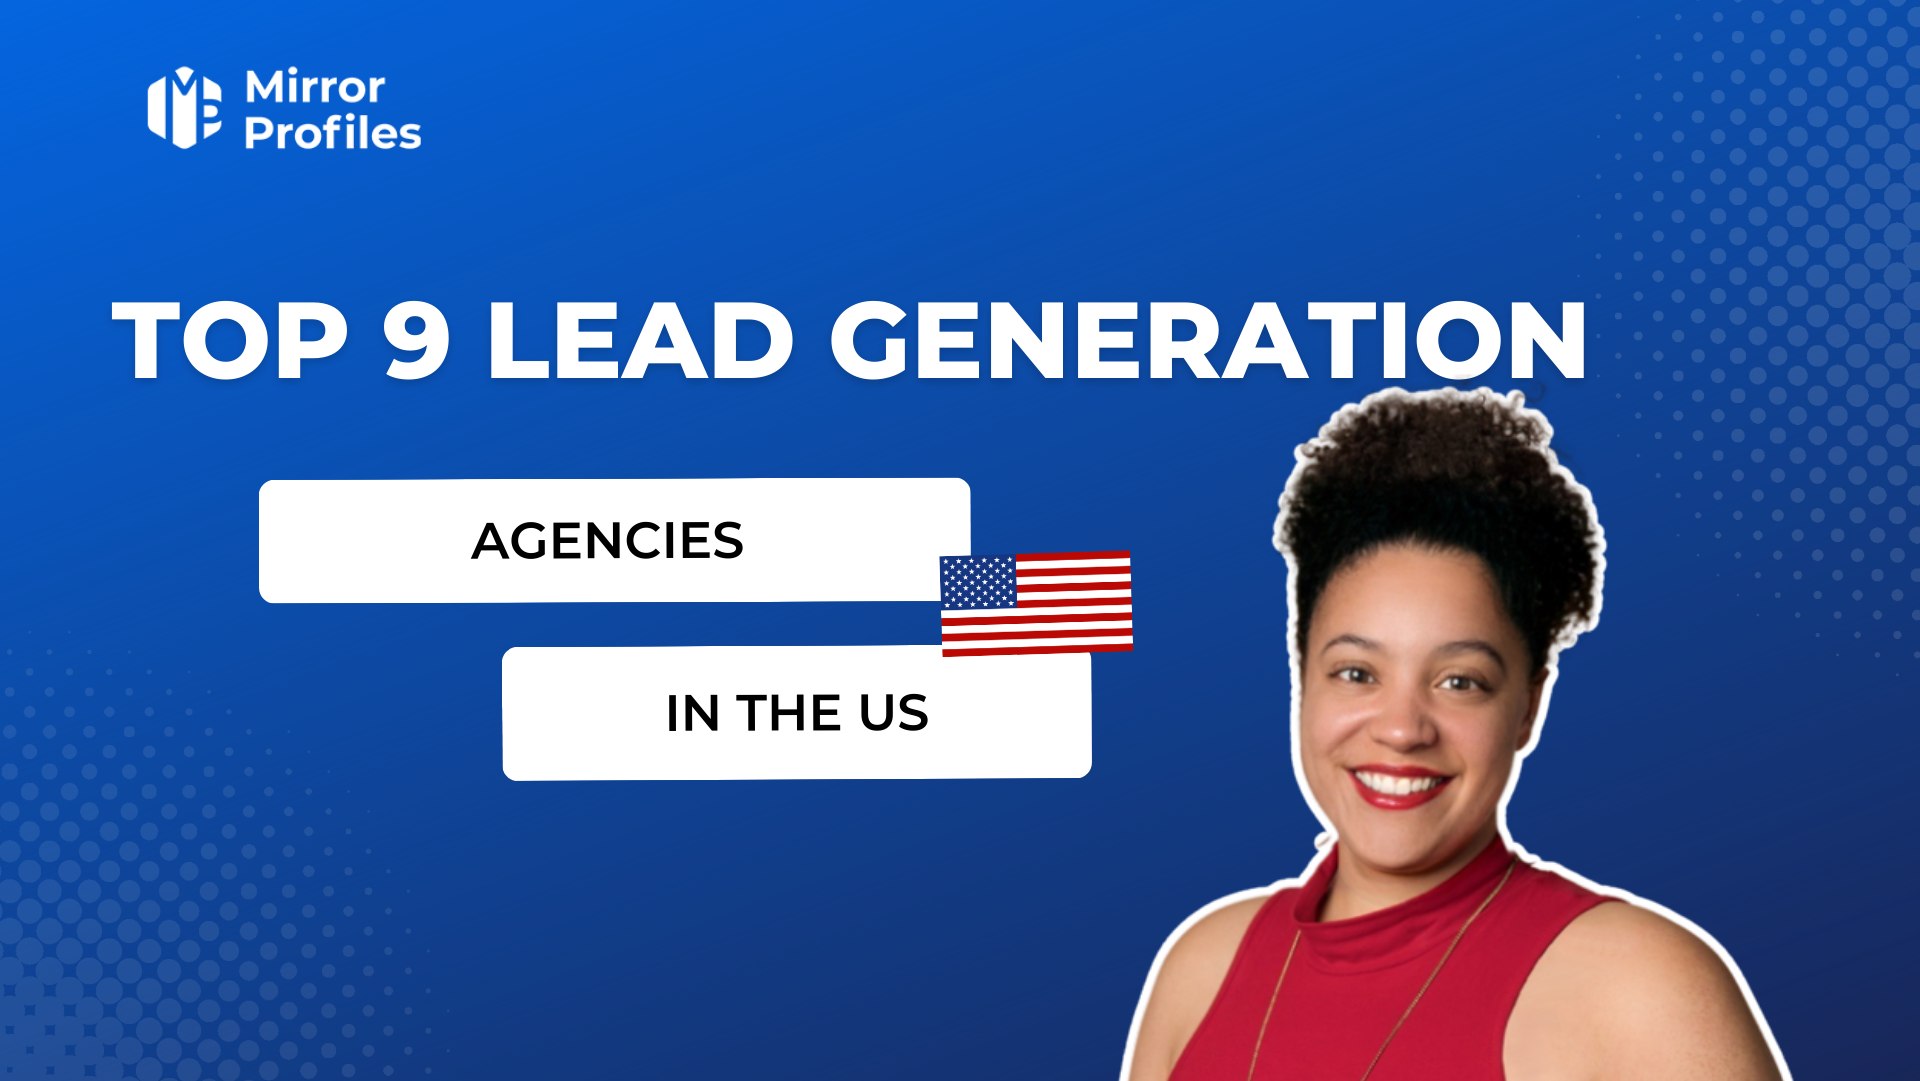 Top 9 lead generation agencies in the US